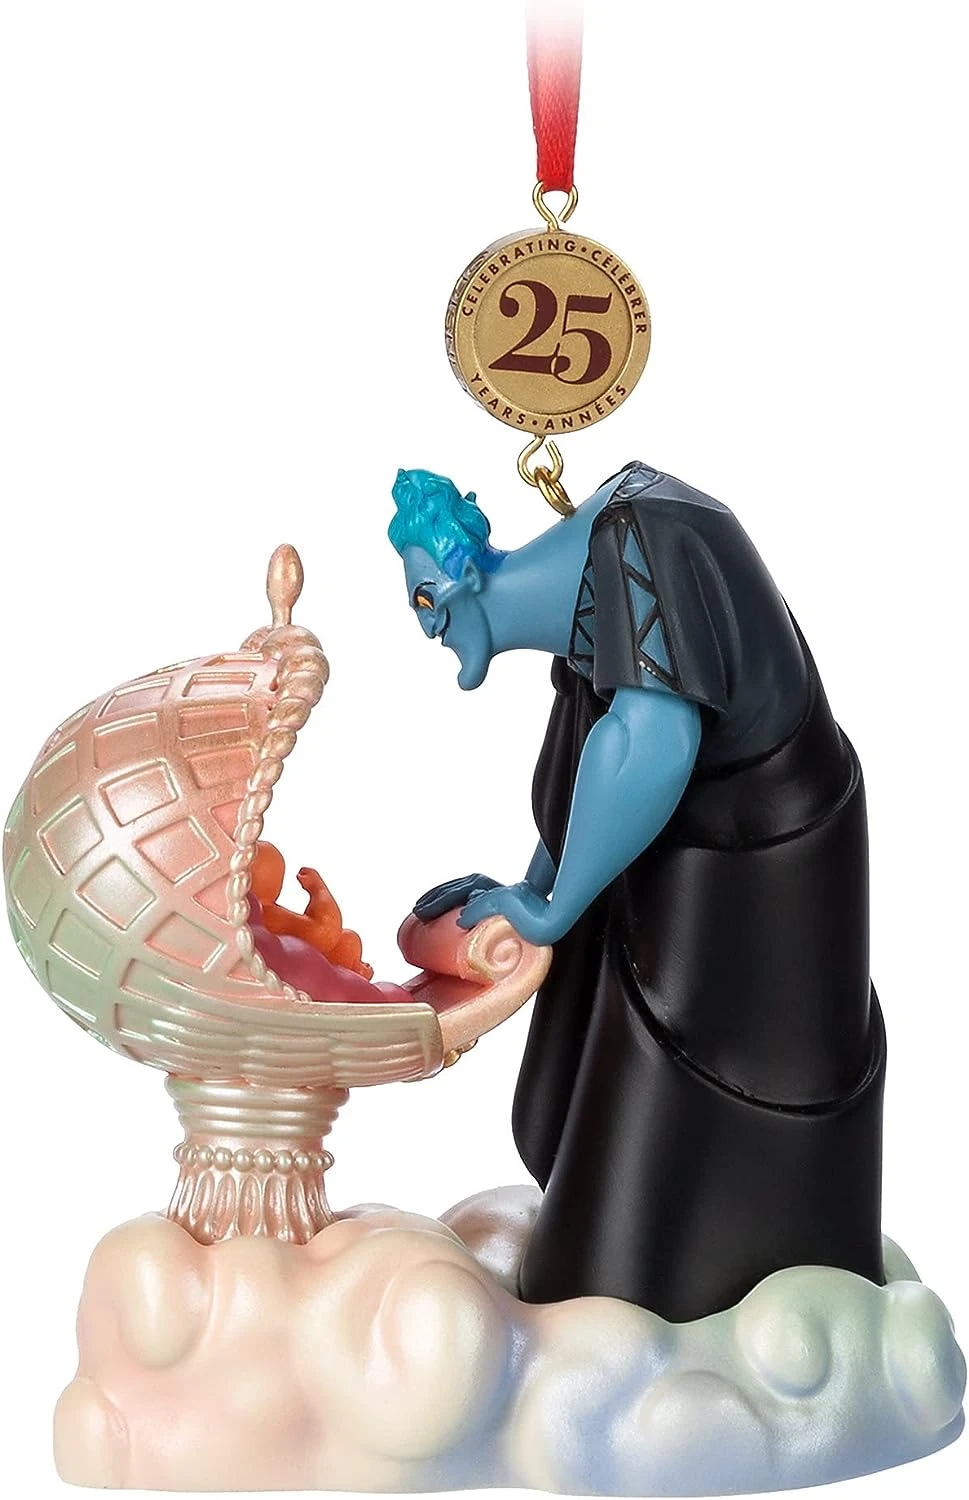 item Ornament - Hades - 25th Anniversary - Hercules - Limited Release 61qggrrxhsl-ac-sl1500-jpg